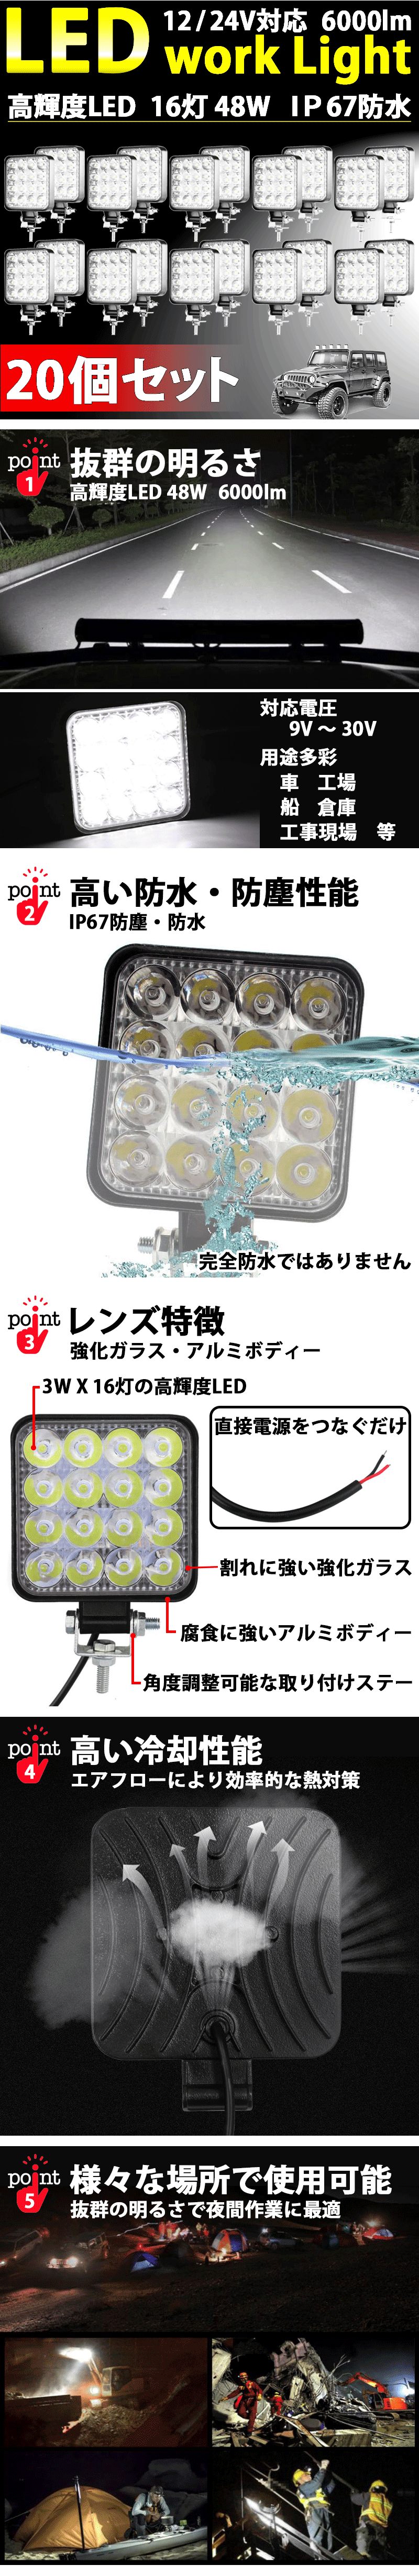 LED作業灯20個セット_1